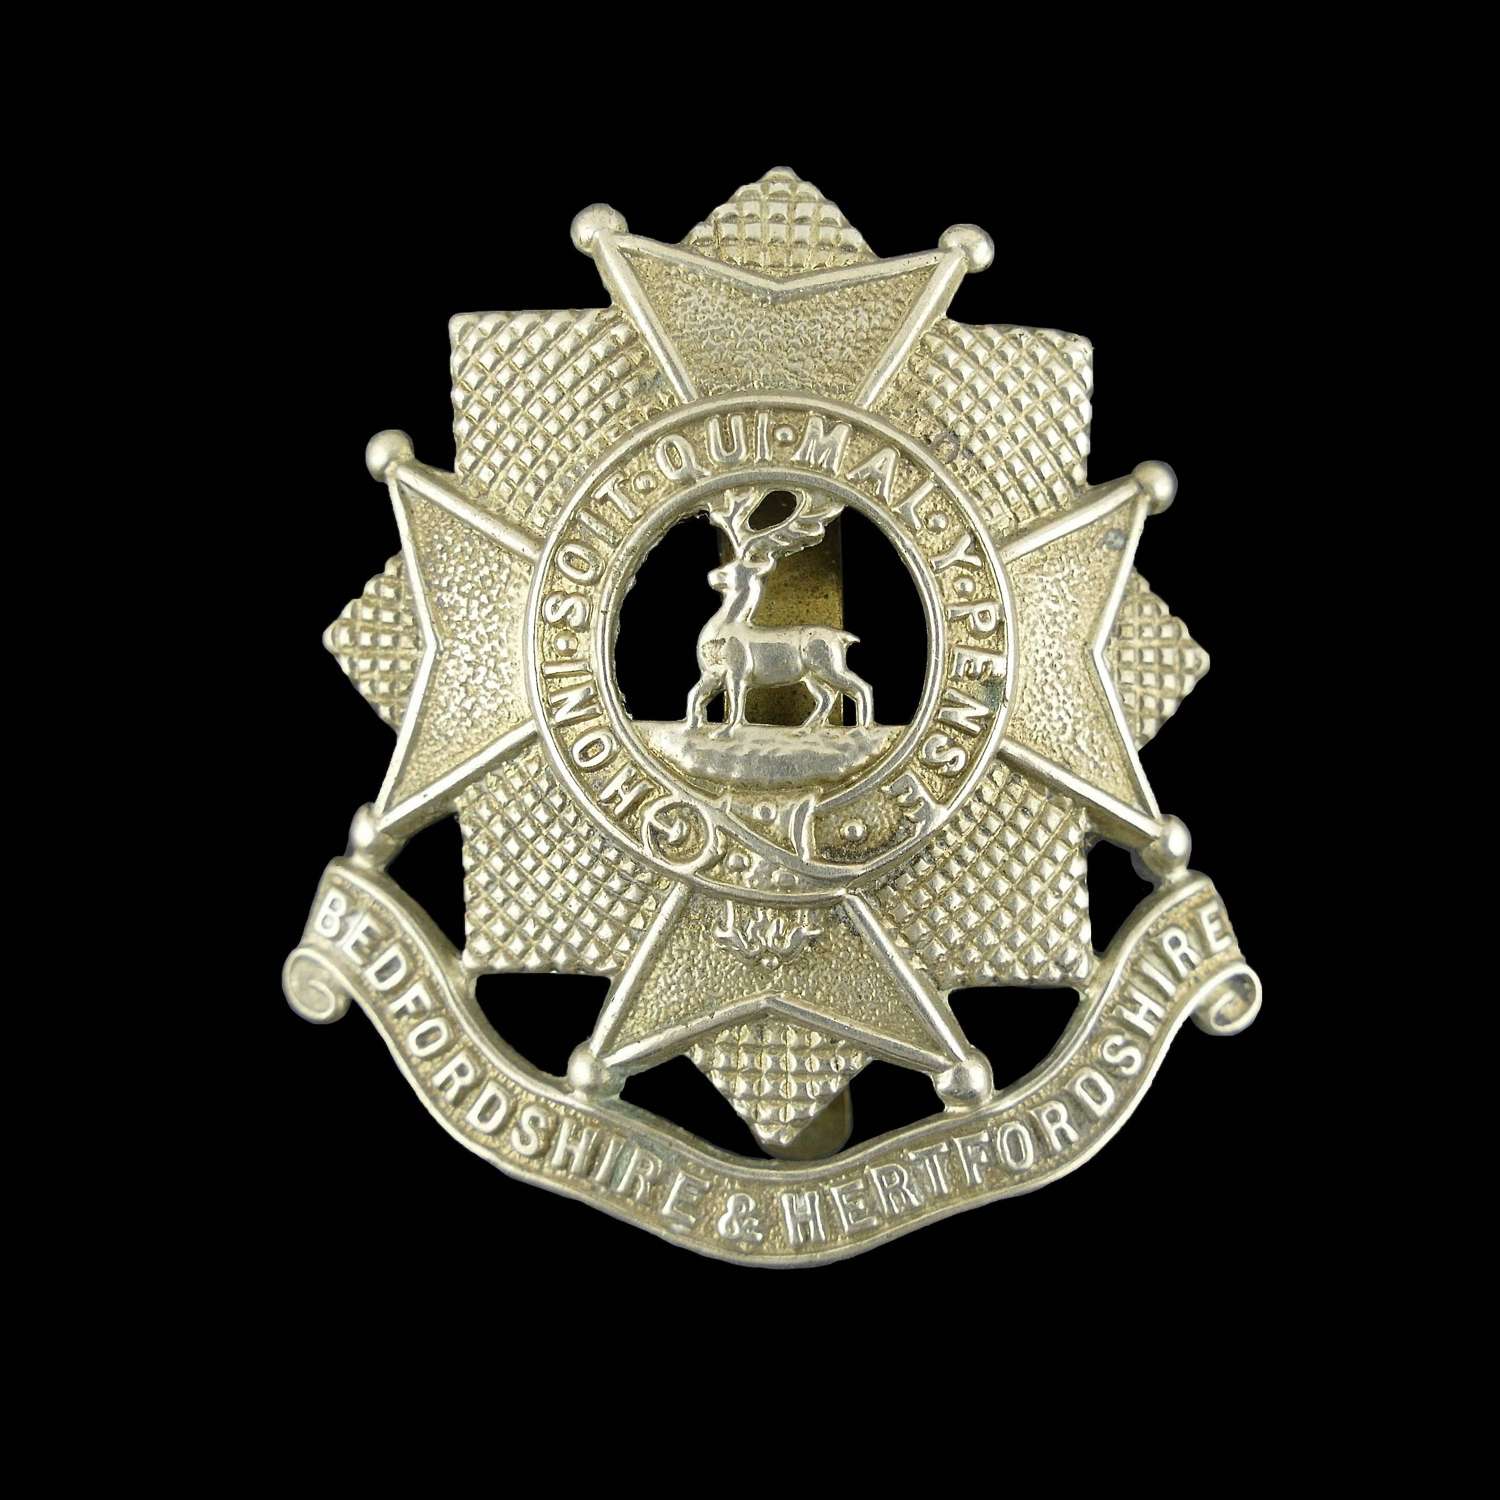 Bedfordshire & Herfordshire cap badge